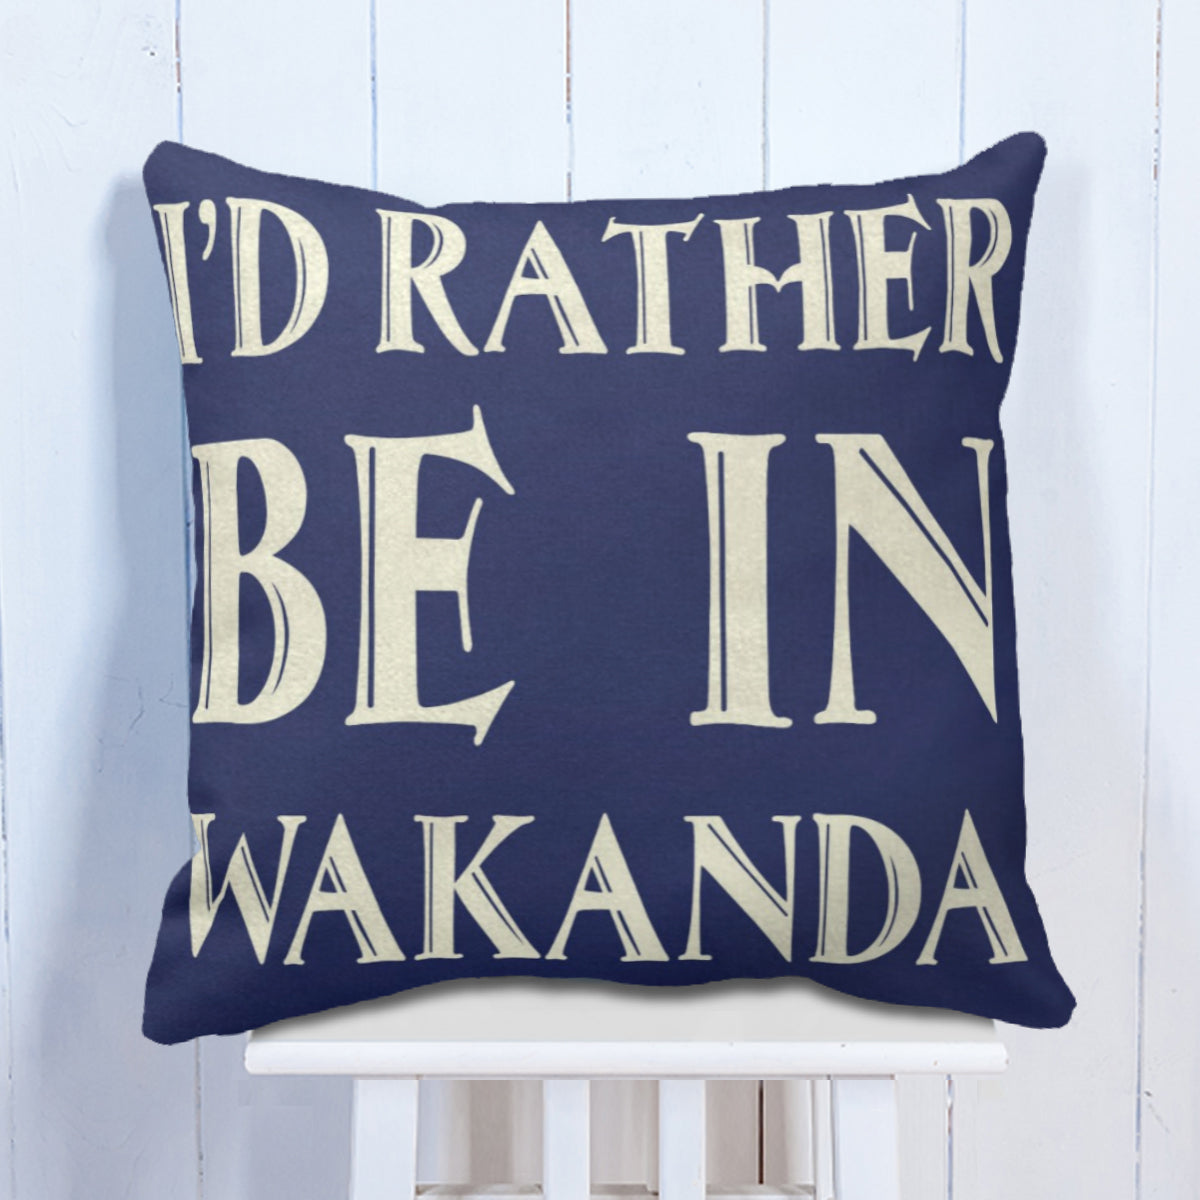 Rather Be In Wakanda Cushion